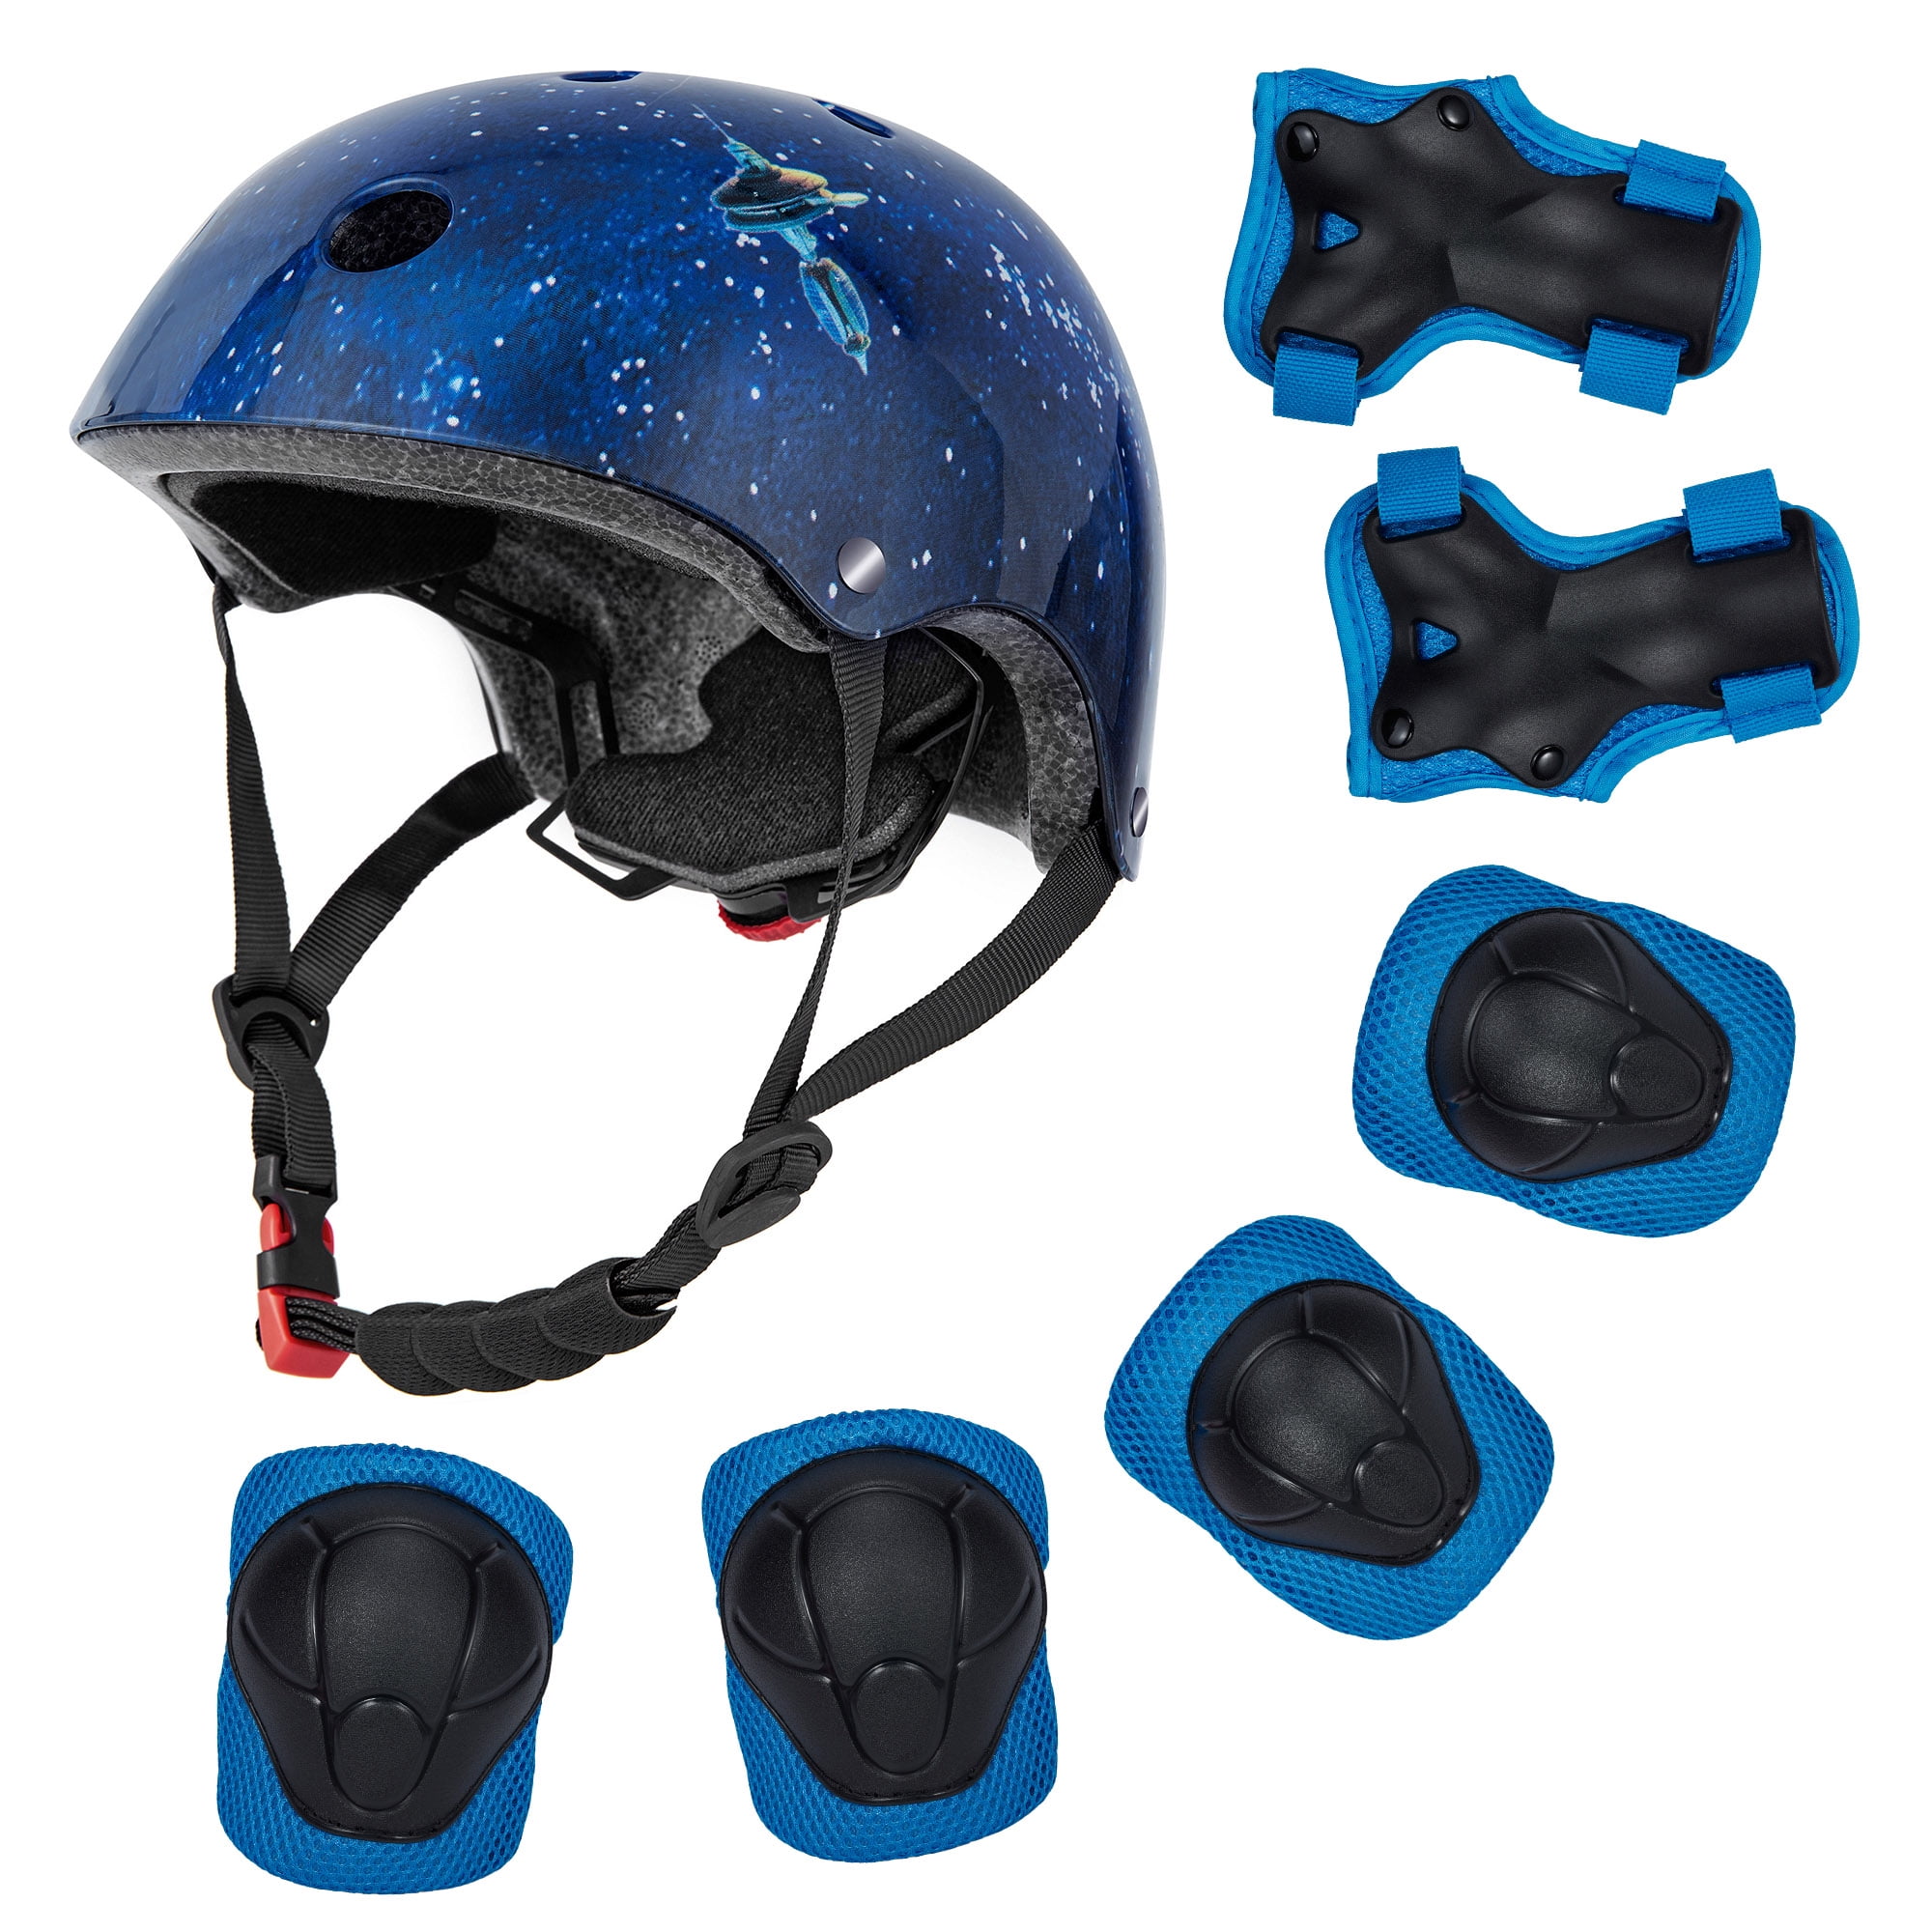 Adjustable Children Kids Safety Helmet Bicycle Bike Skating Helmets Boys/Girls 